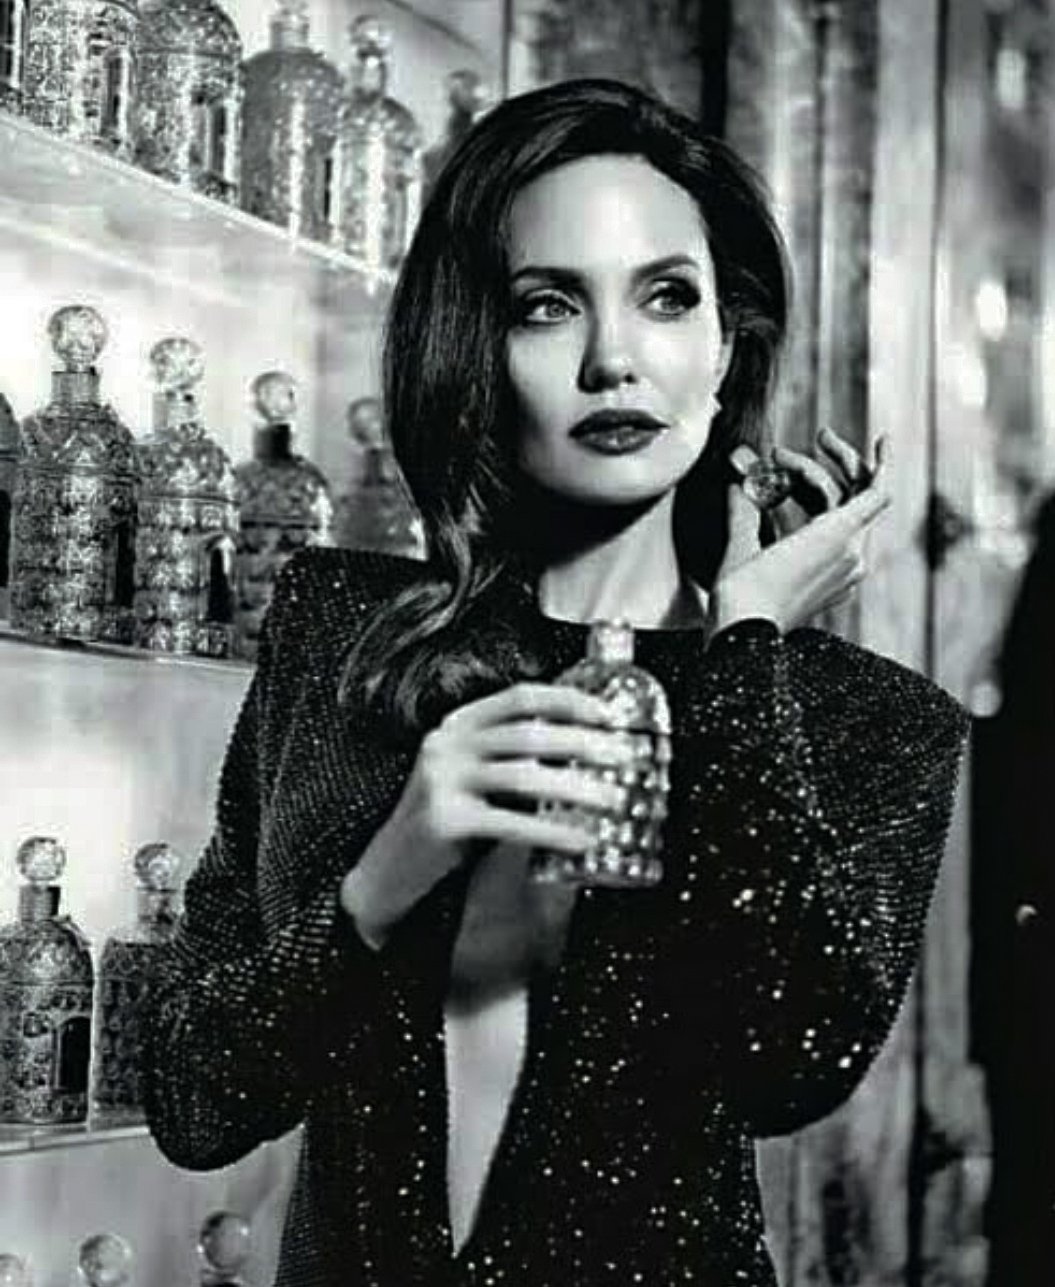 Angelina Jolie Looks Classy in All Black for Guerlain Event: Photo 4663838, Angelina Jolie Photos